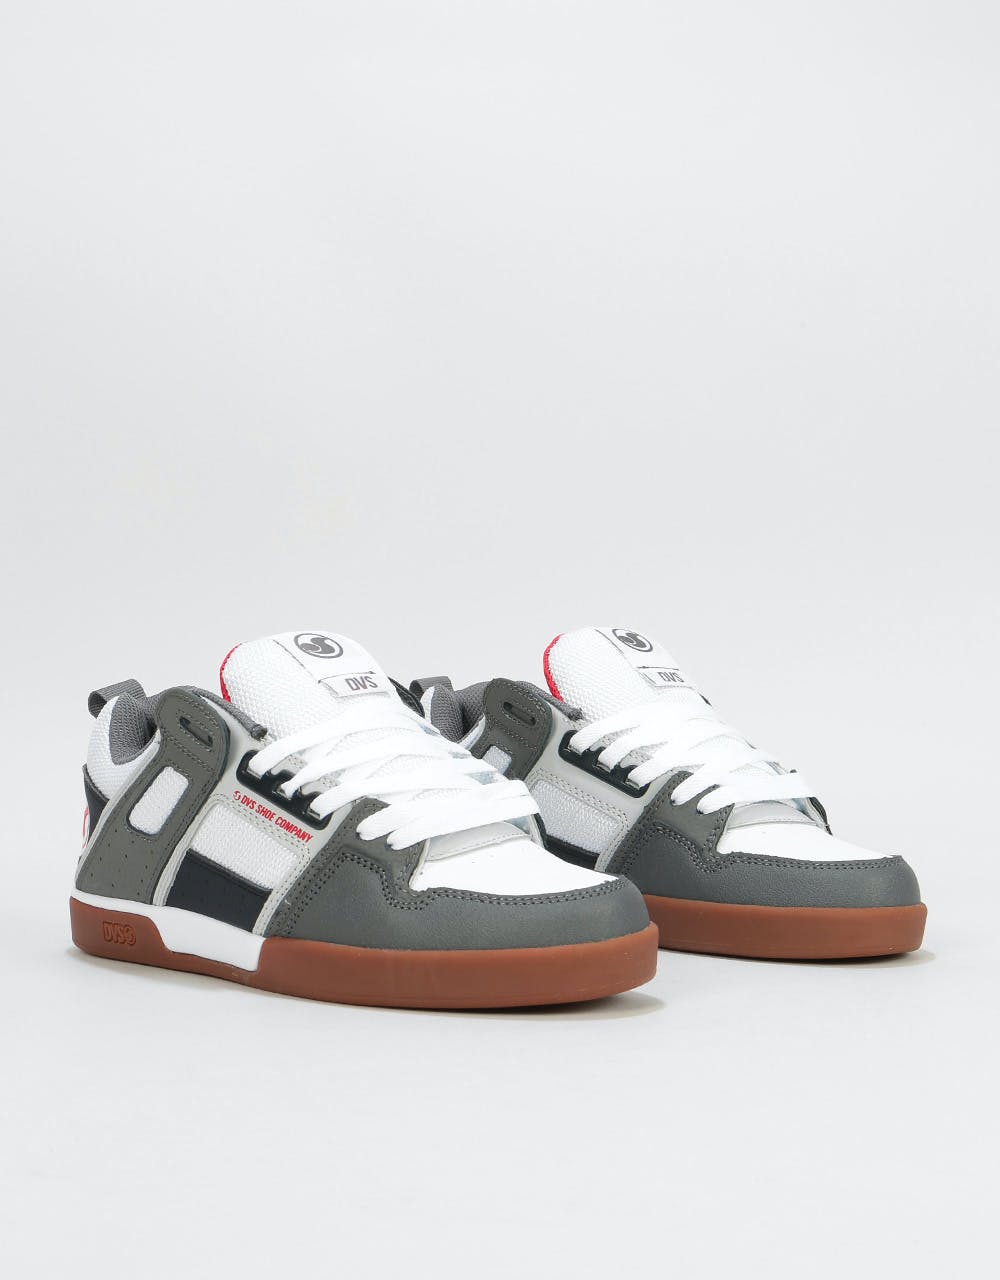 DVS Commanche 2.0 Skate Shoes - White/Grey/Navy/Nubuck